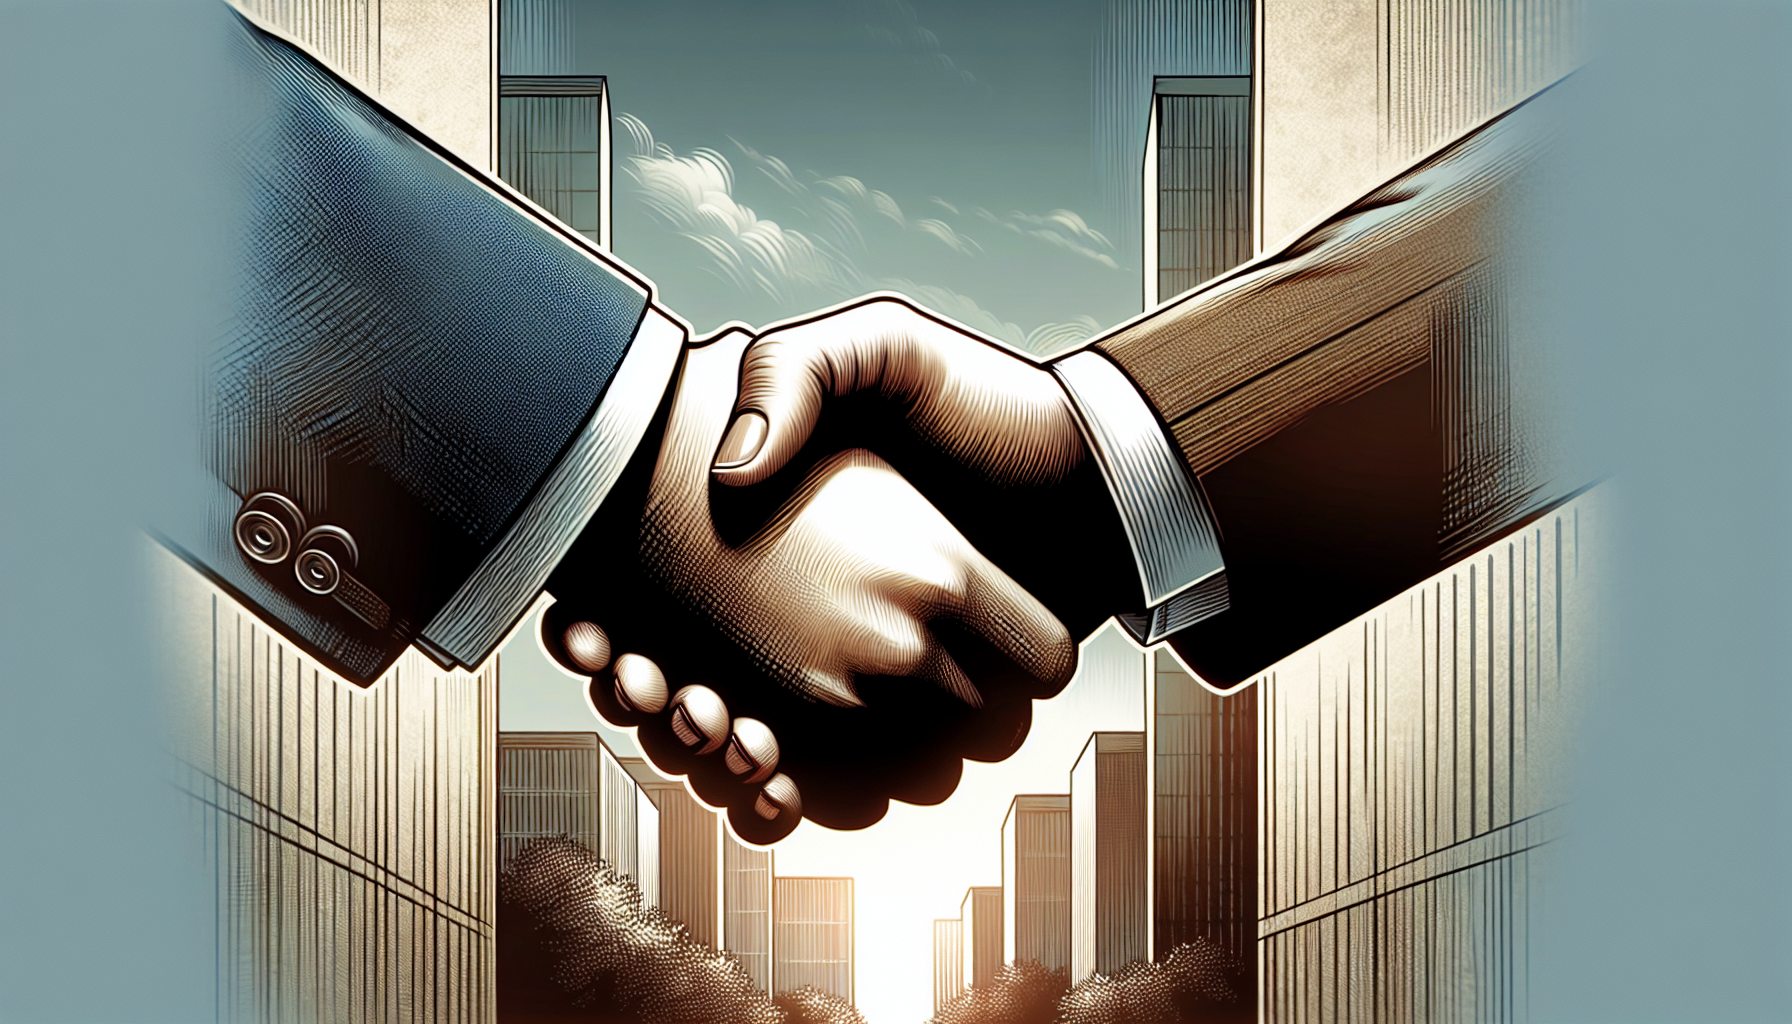 Illustration of a handshake